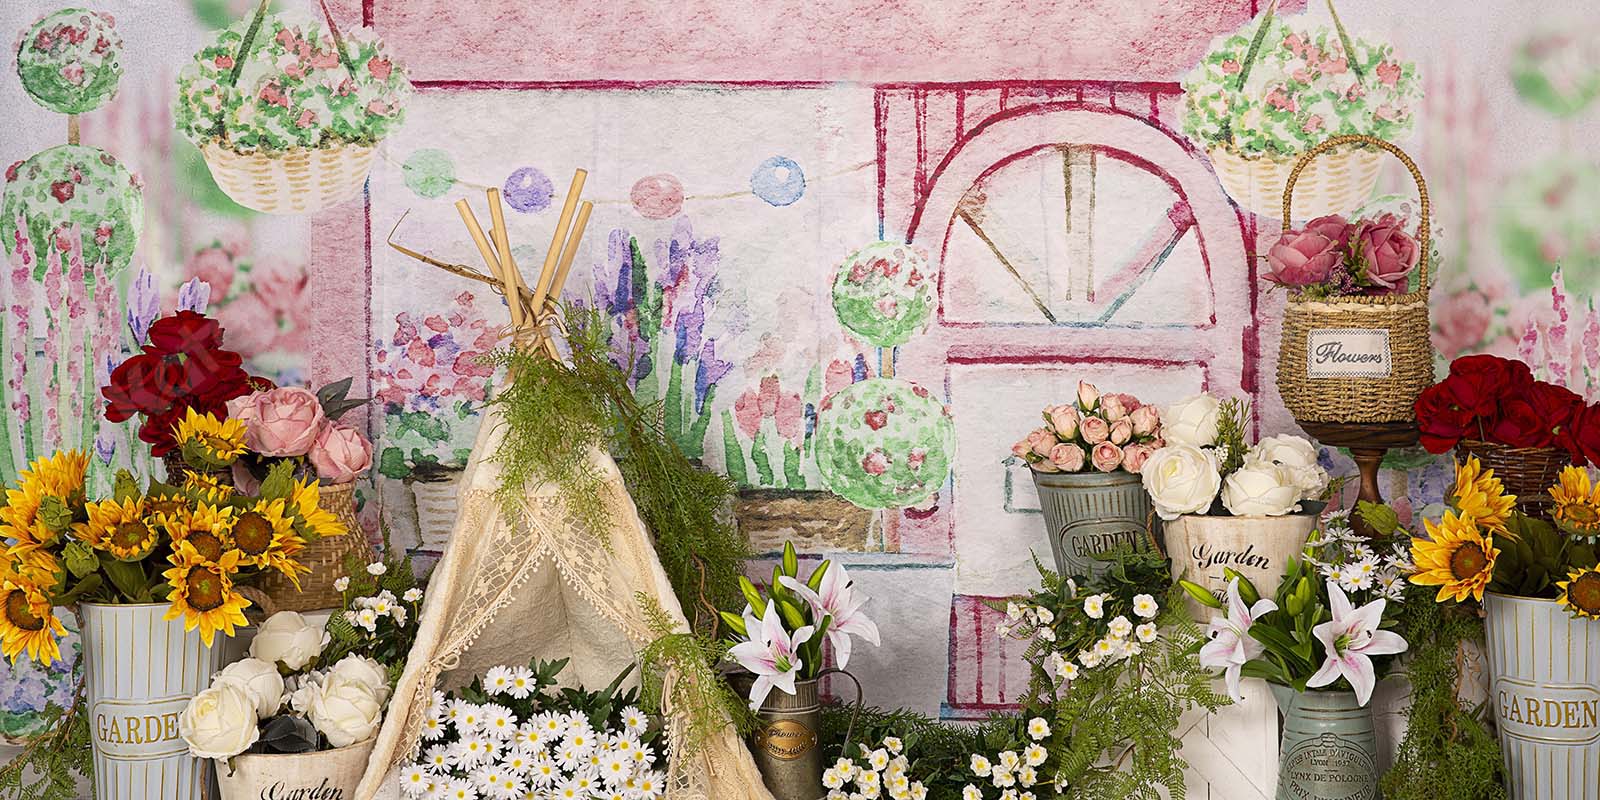 Kate Spring Flower Shop Flowers Tent Backdrop Designed by Emetselch